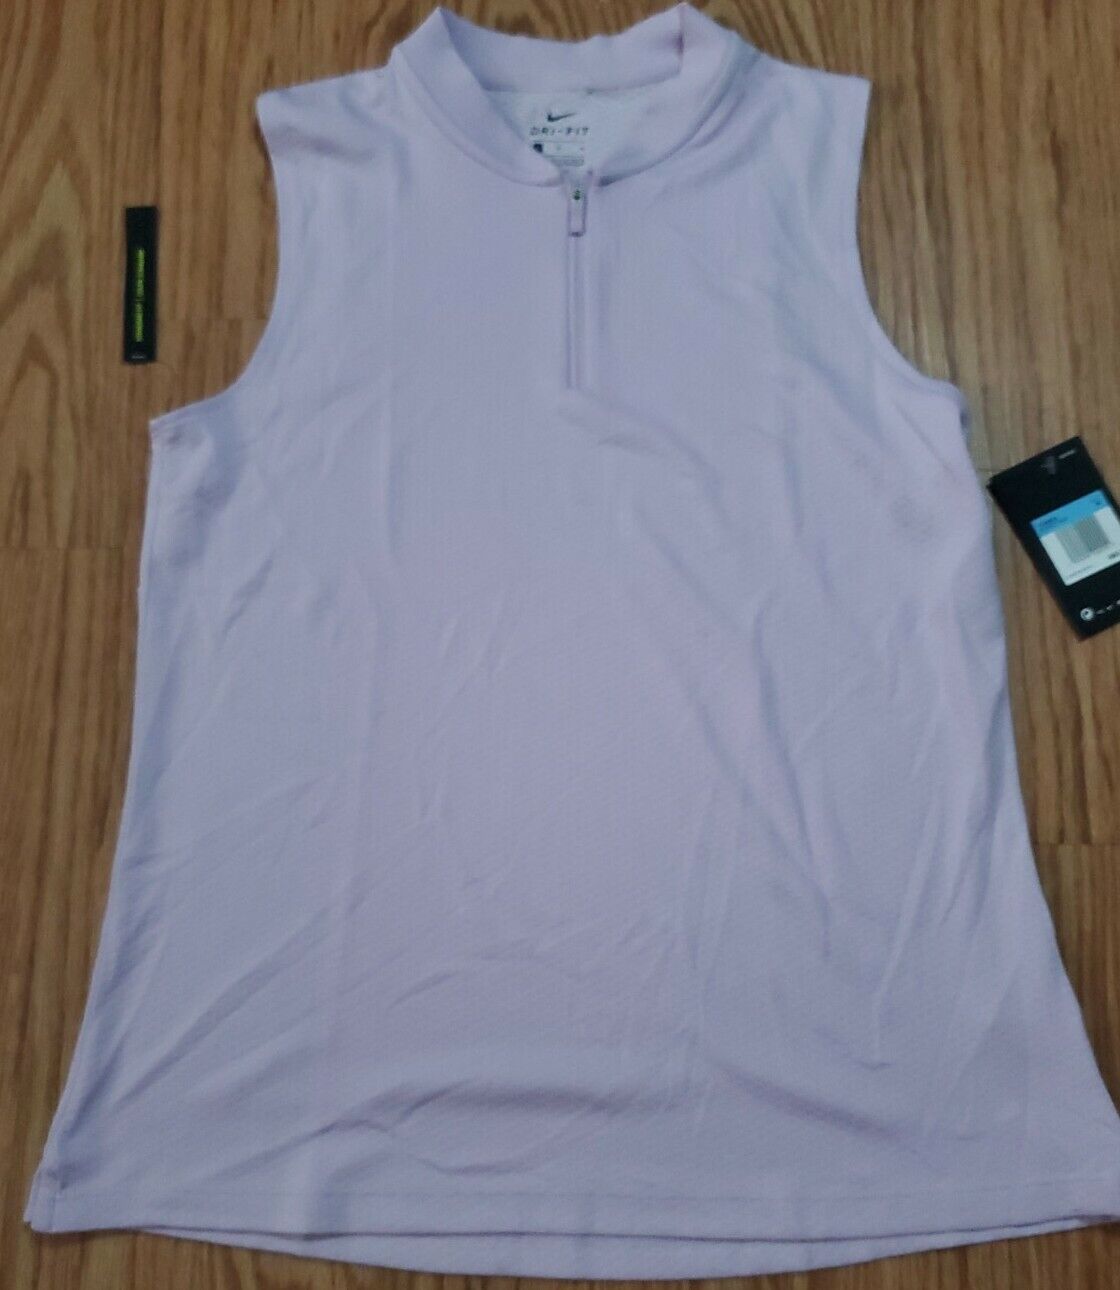 Nwt Womens Nike Sleeveless Polo Medium size Attention brand Purple AJ5227-543 outlet